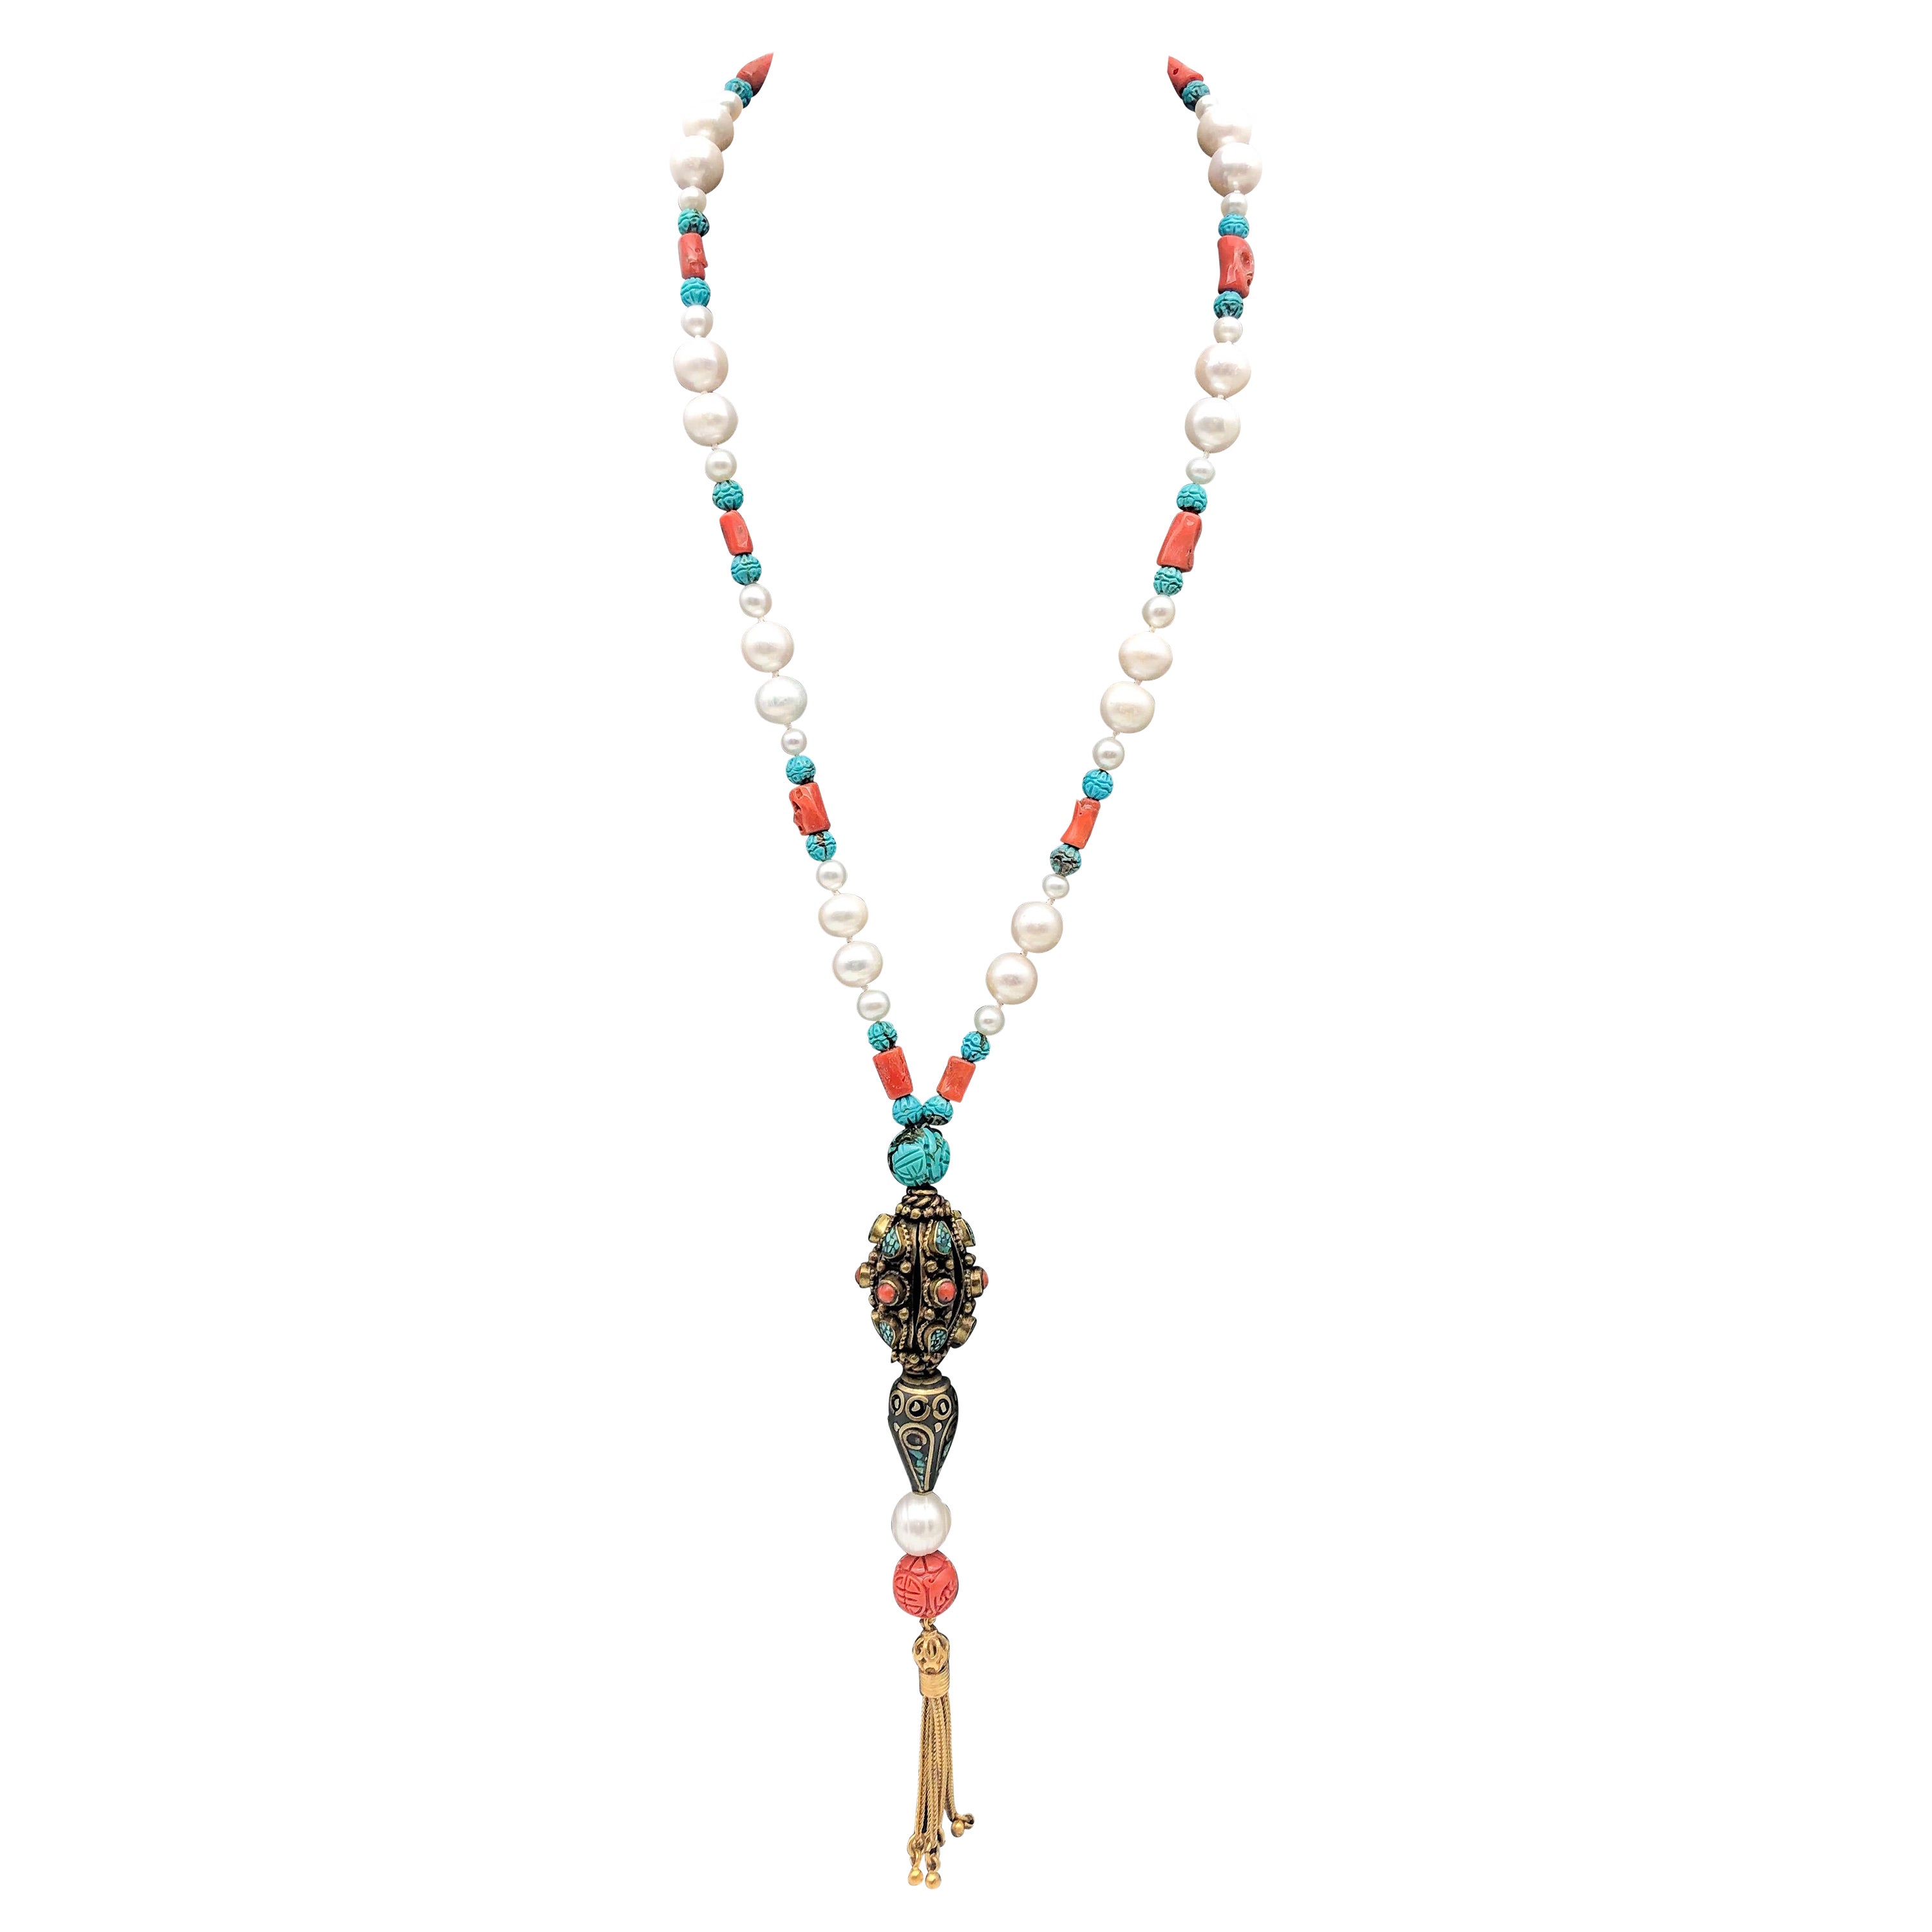 A.Jeschel Elegant Long Pearl necklace with Tibetan Pendant.